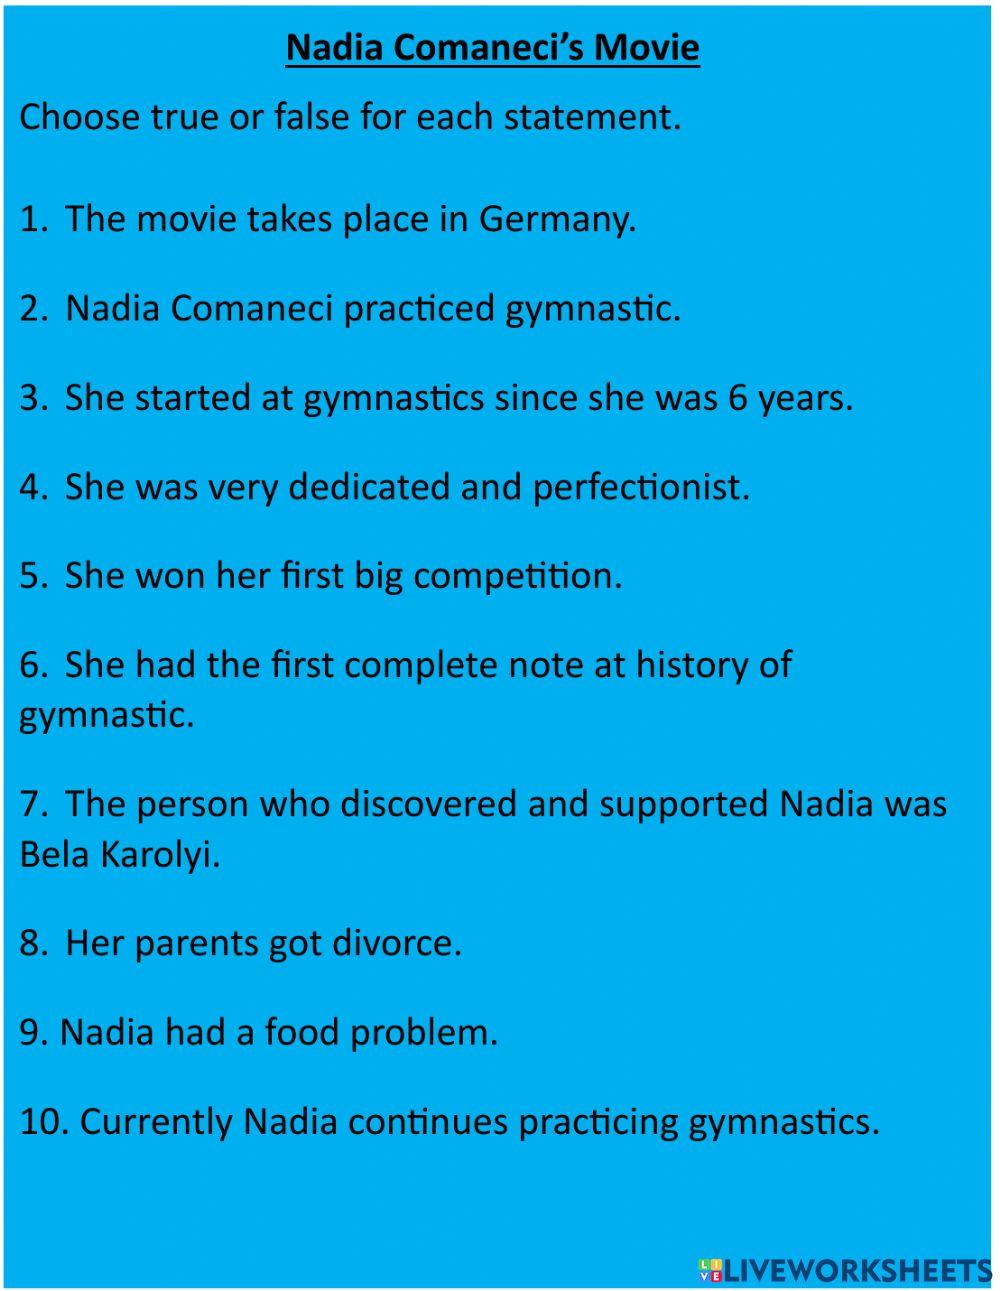 Nadia Comaneci's Biography